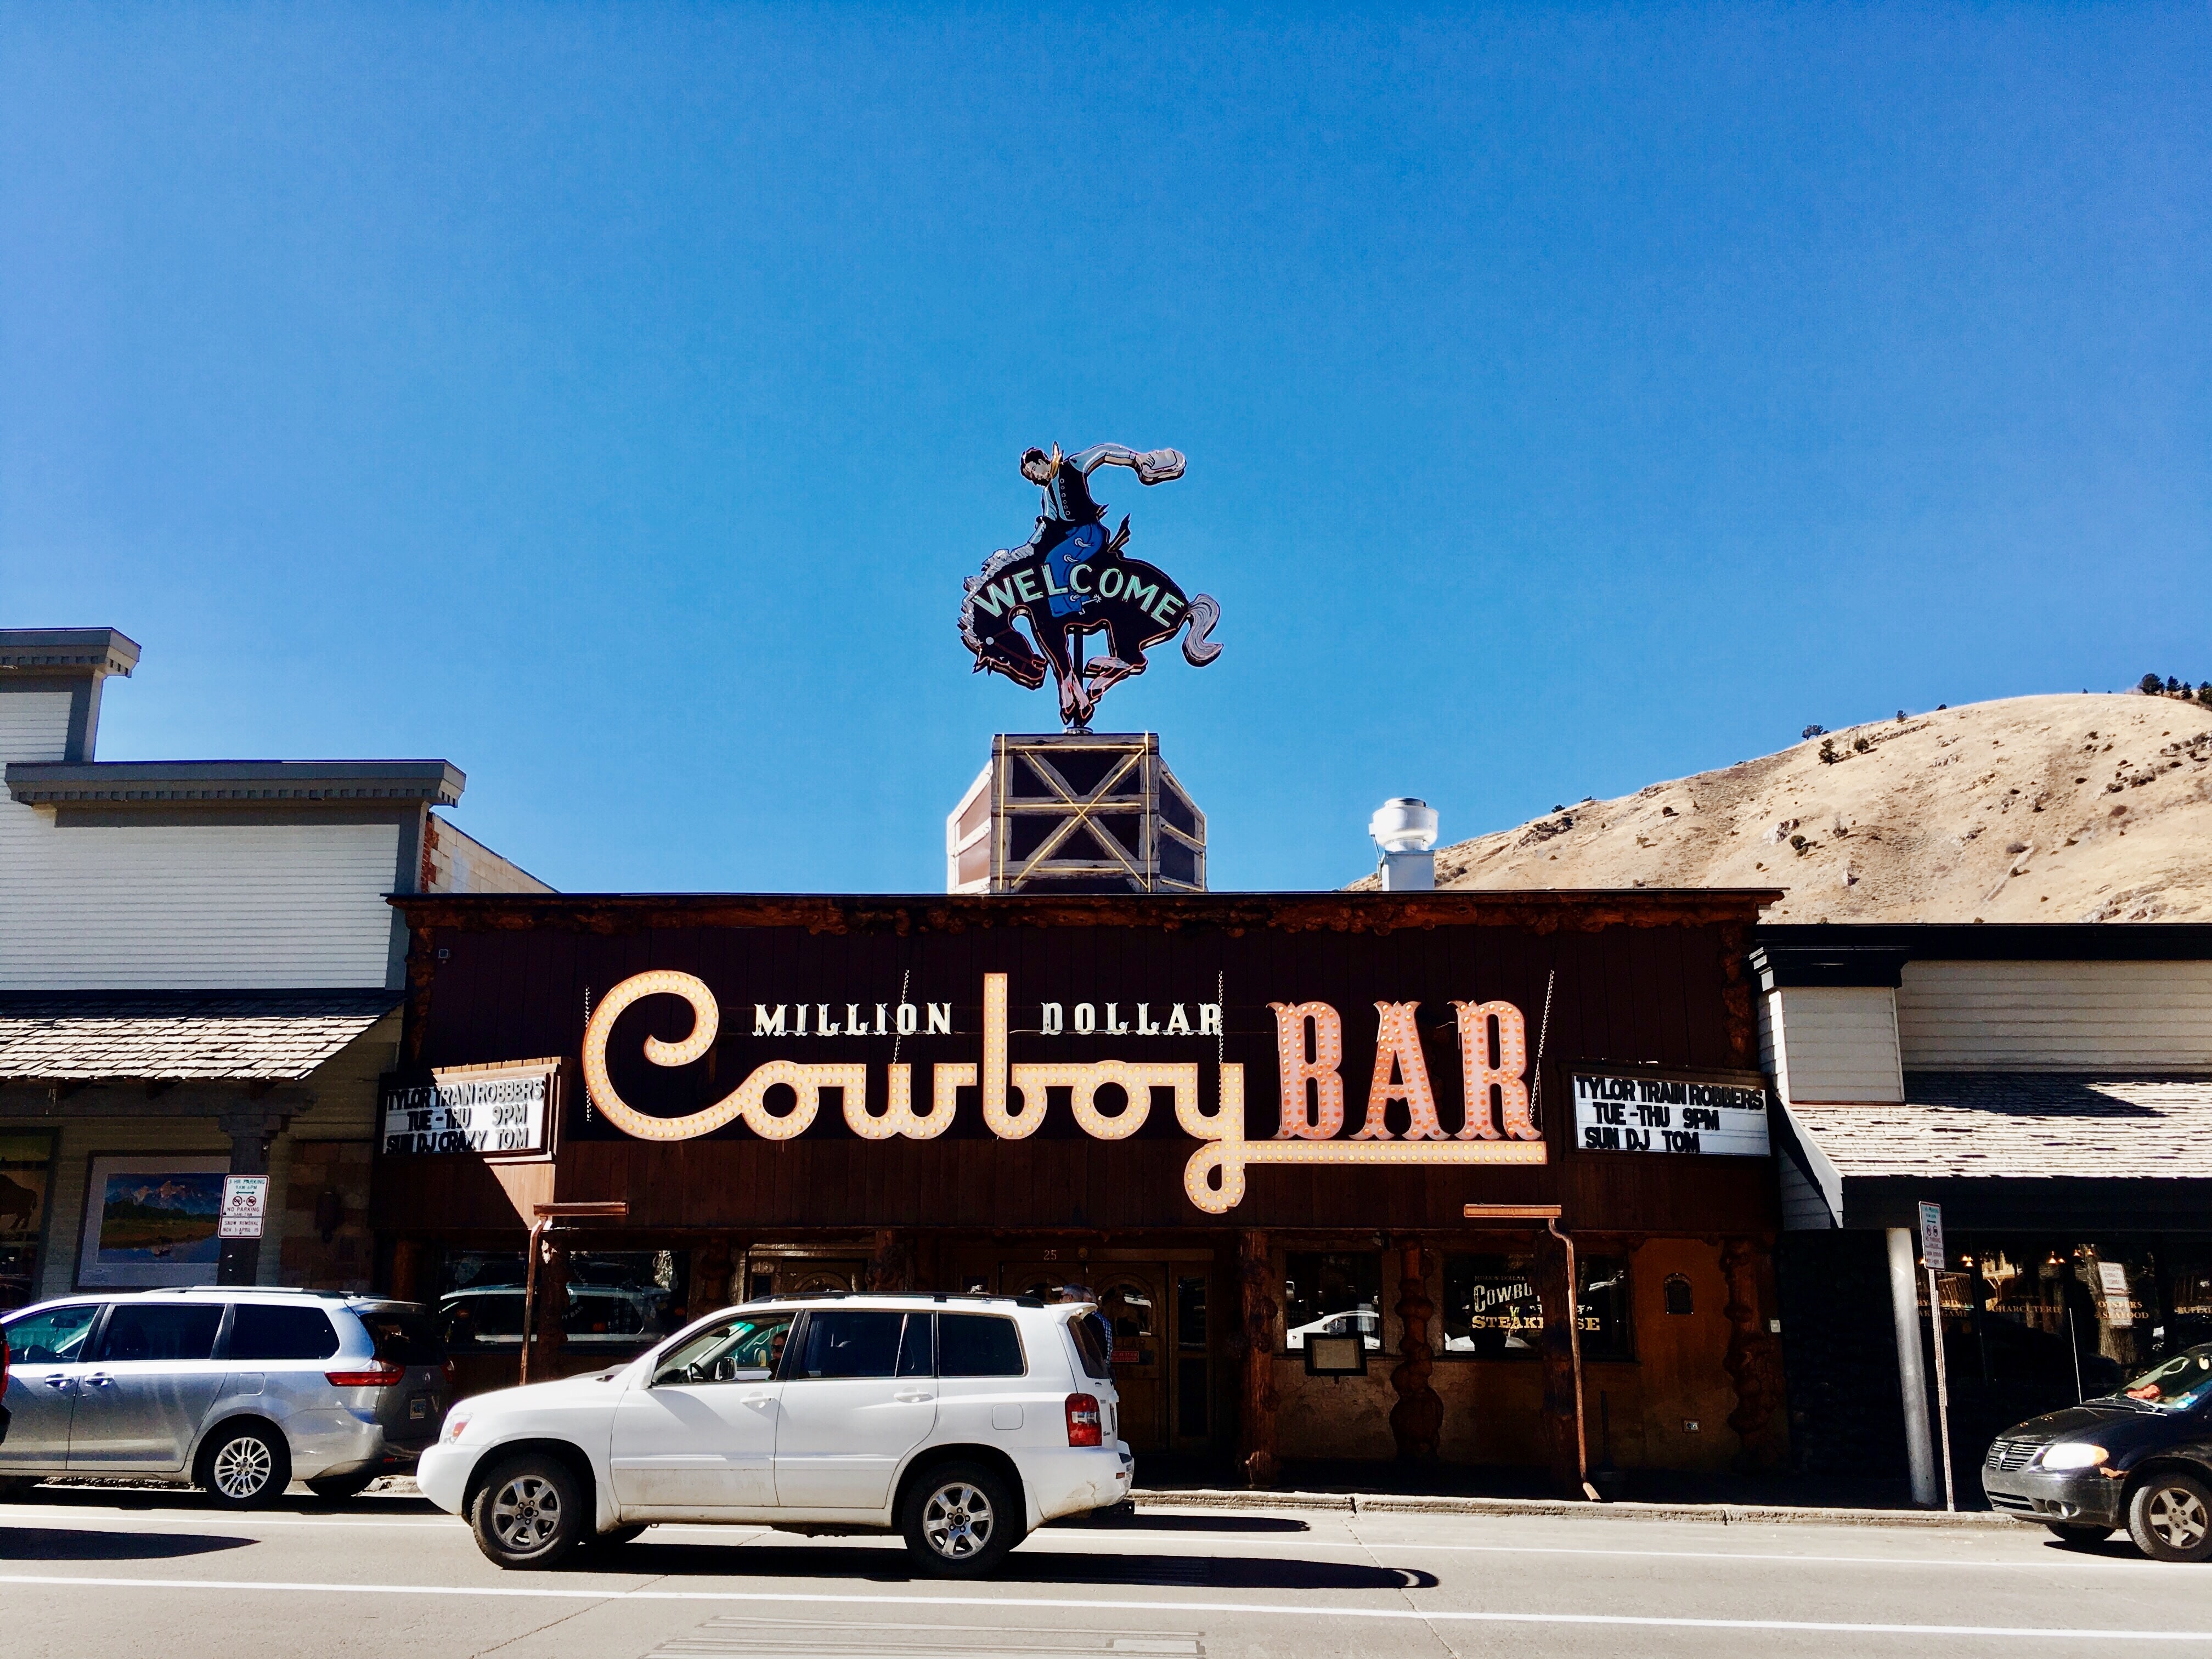 Cowboy bar